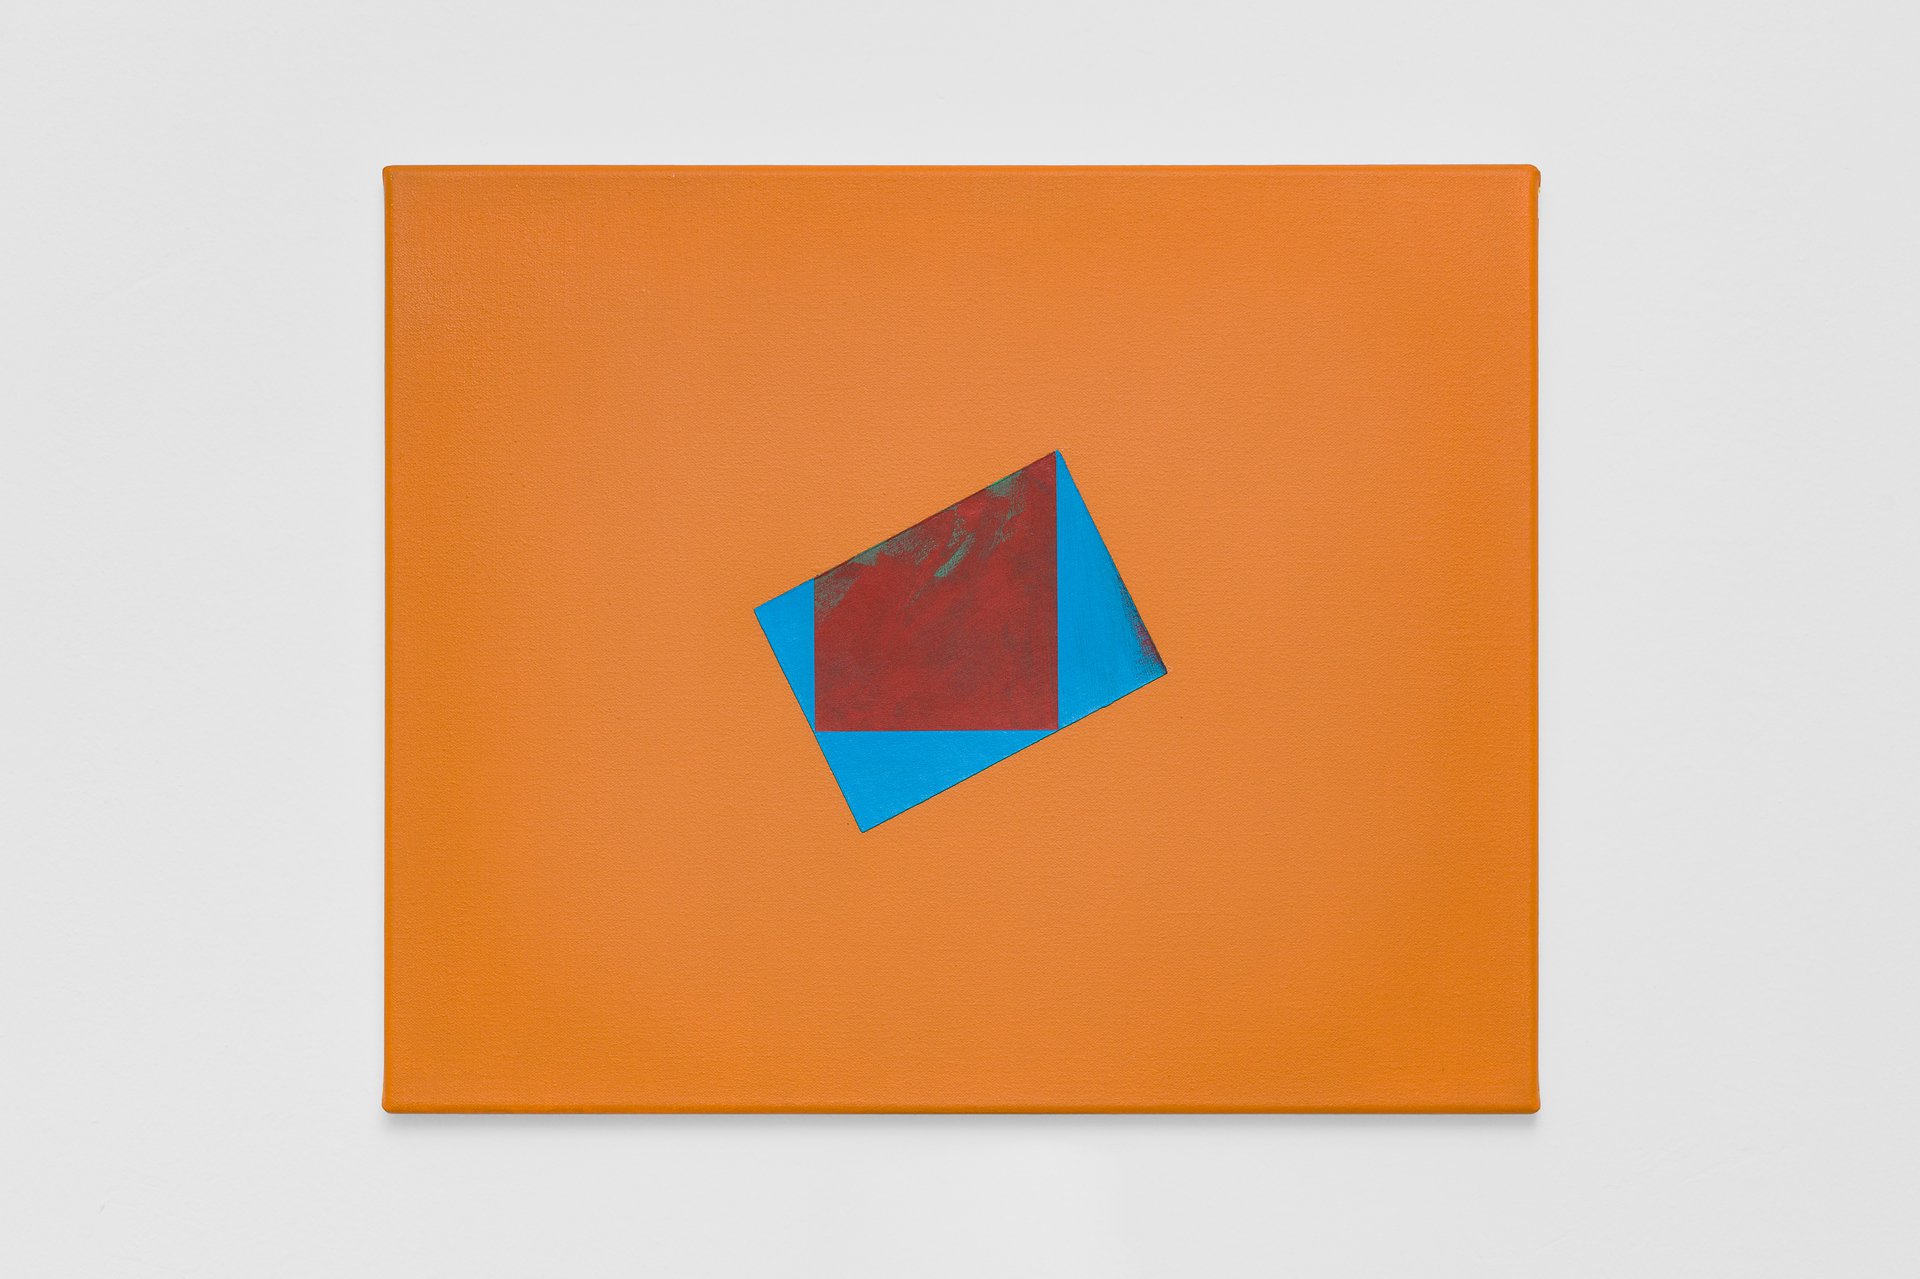 Nick OberthalerUntitled (Open #5), 2021Acrylic on paper on canvas50 x 40 cm